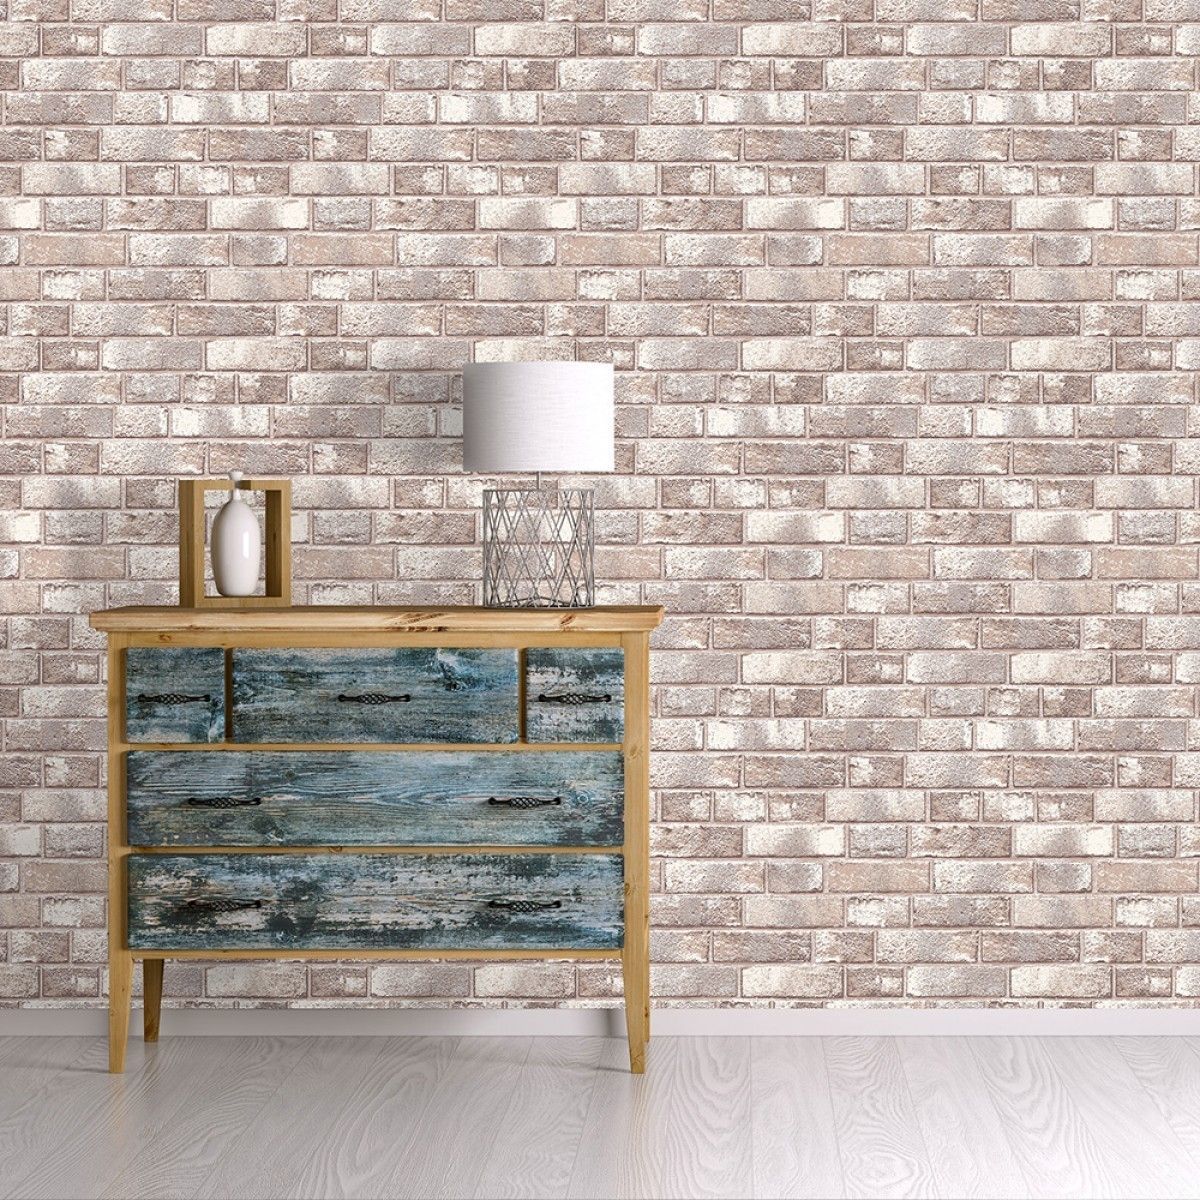 Brick Country Red BR526 Self-Adhesive Wallpaper